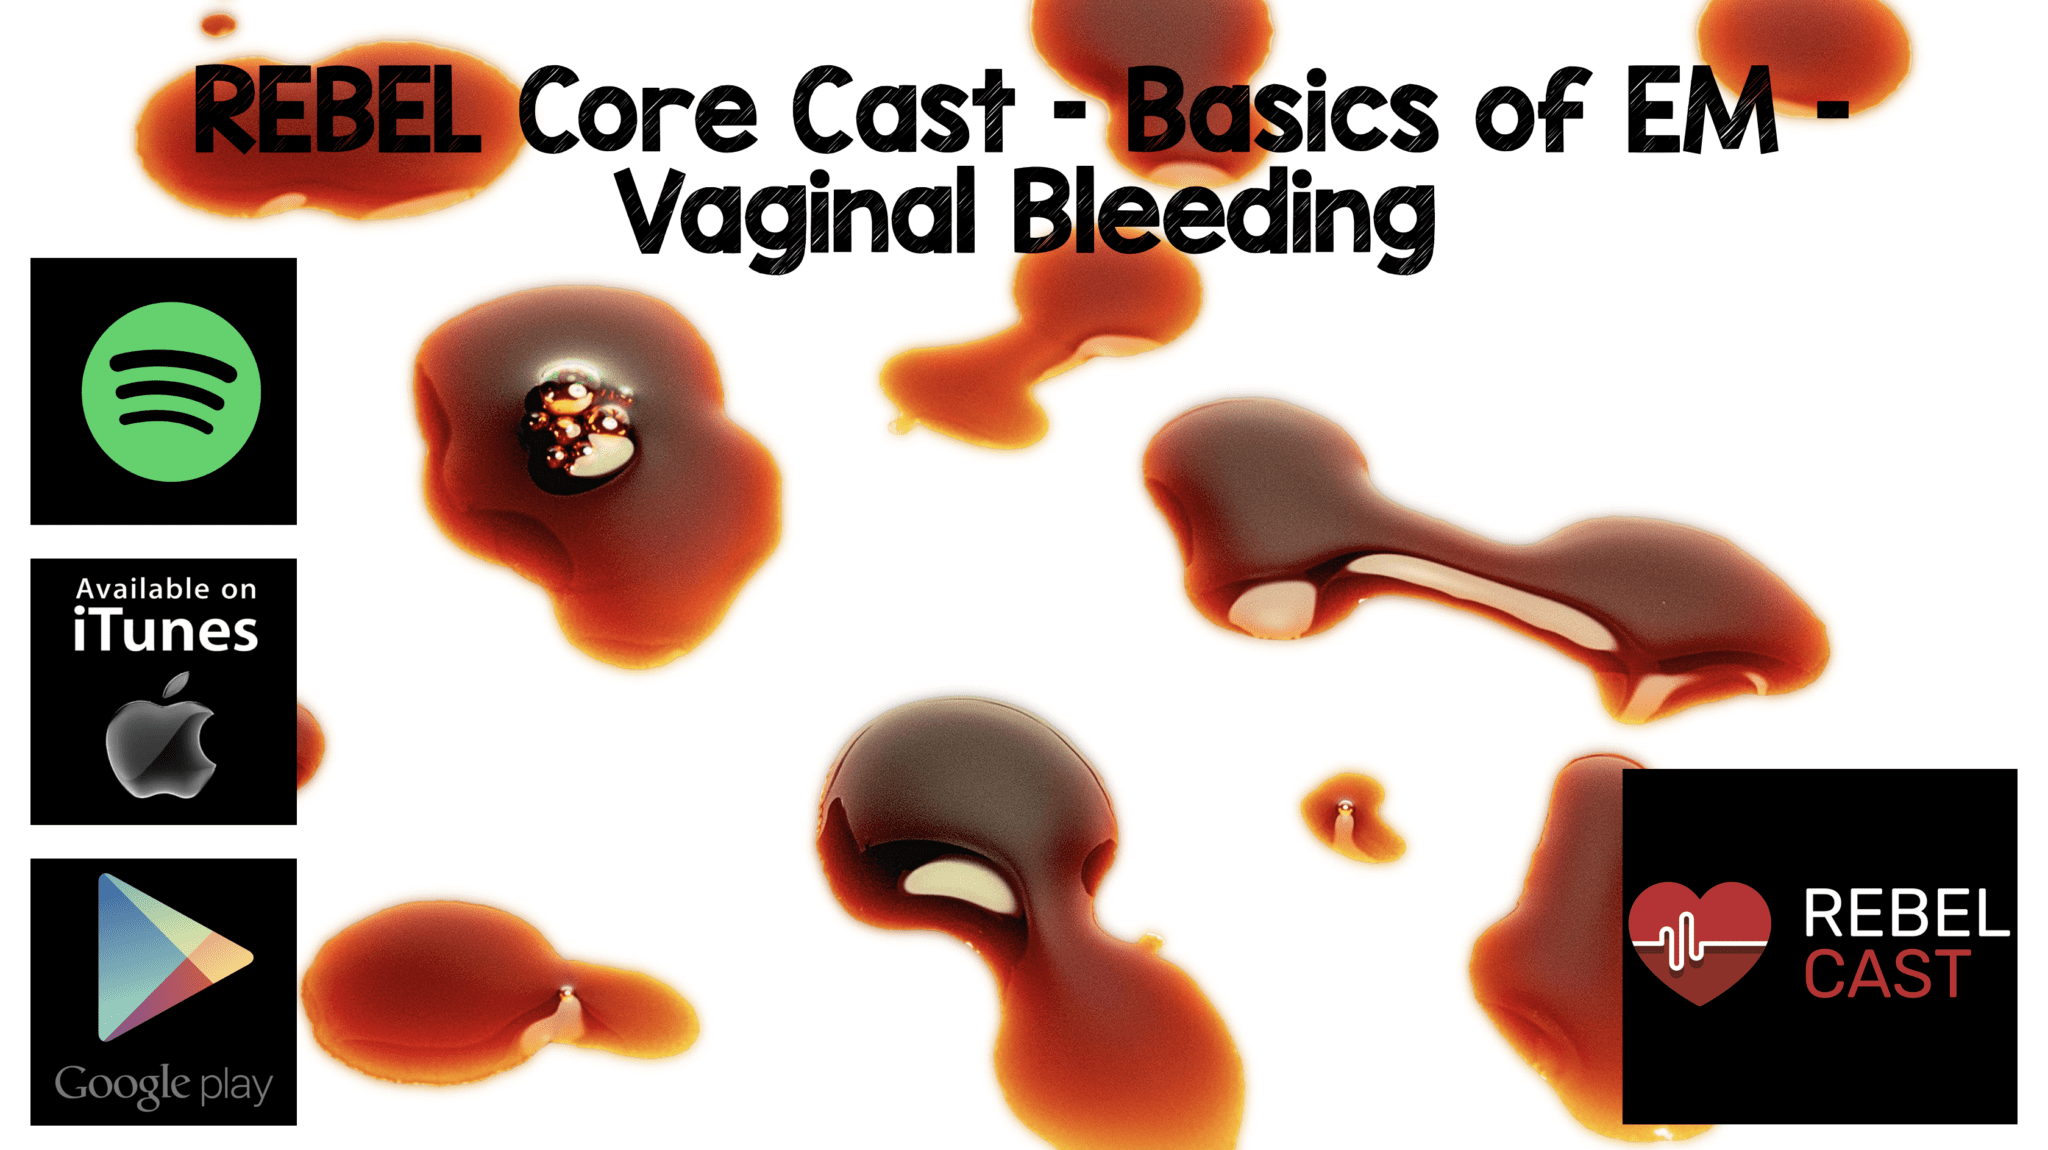 REBEL Core Cast - Basics of EM - Vaginal Bleeding - REBEL EM